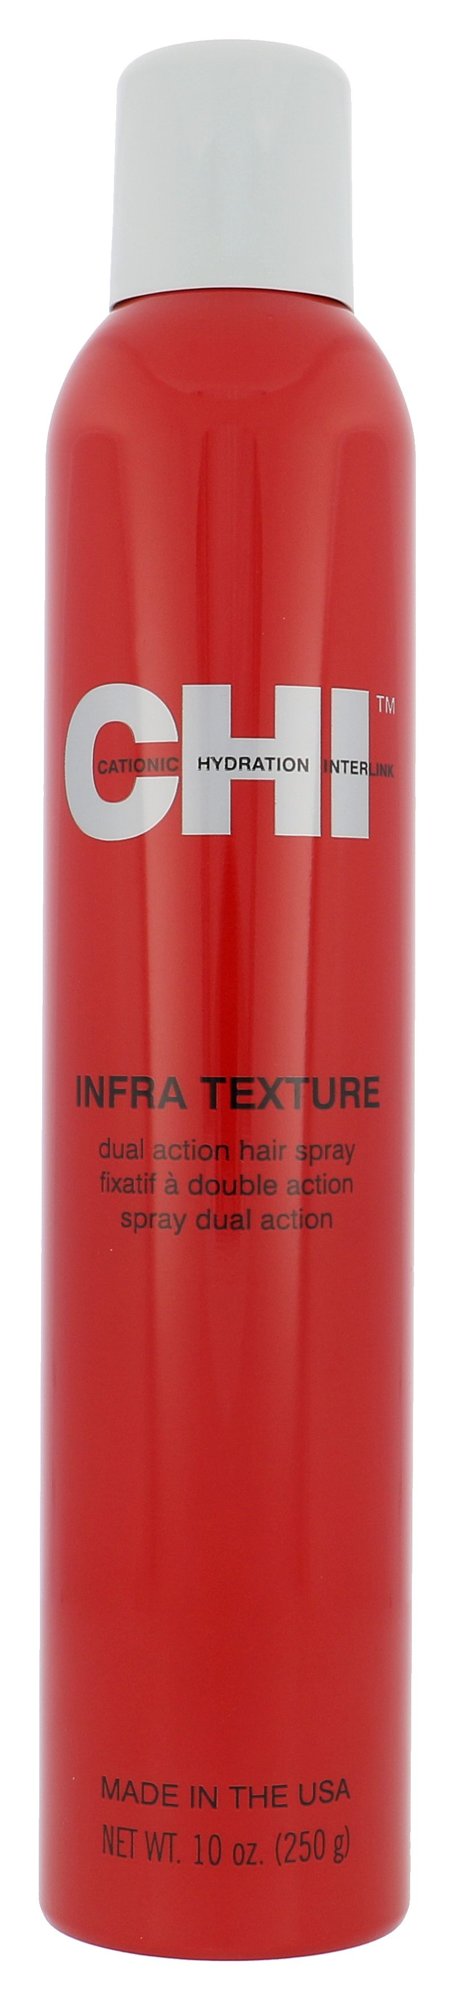 Farouk Systems CHI Infra Texture Hair Spray